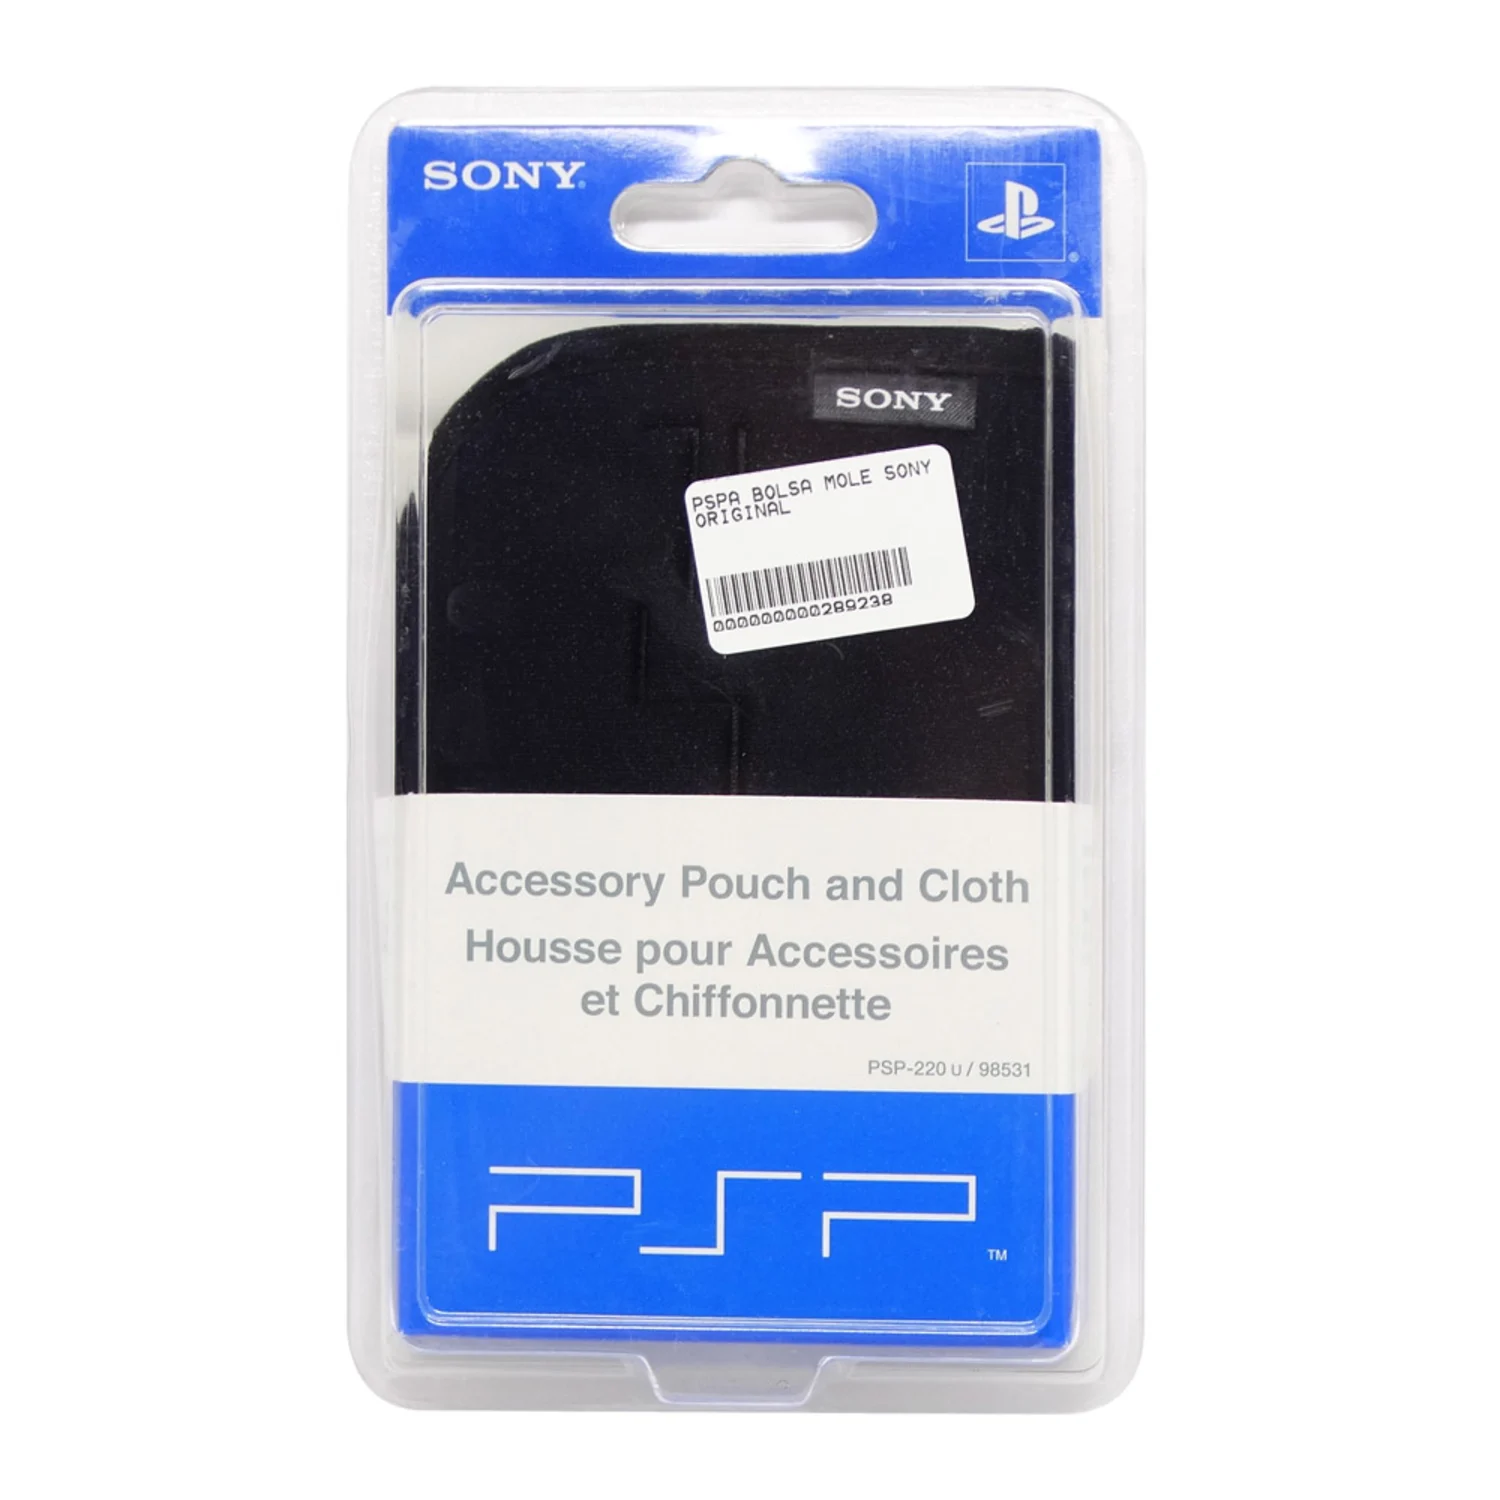 Case Mole Psp Sony Original